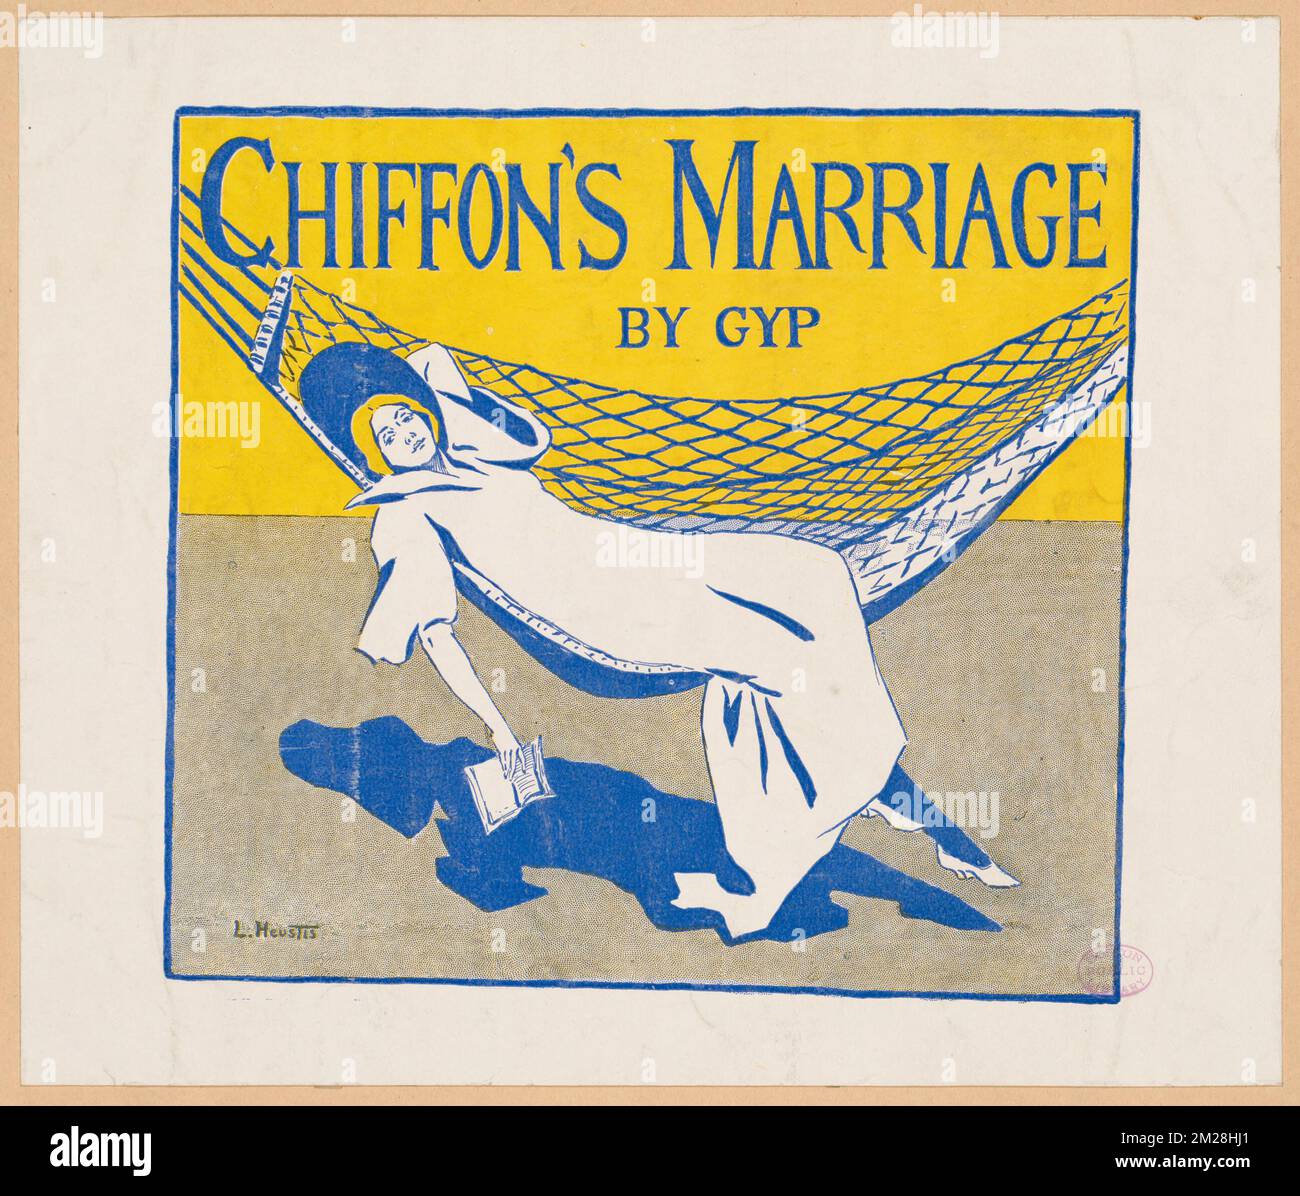 Chiffon's marriage, by GYP , Hammocks Furniture, Books, Leisure Stock Photo